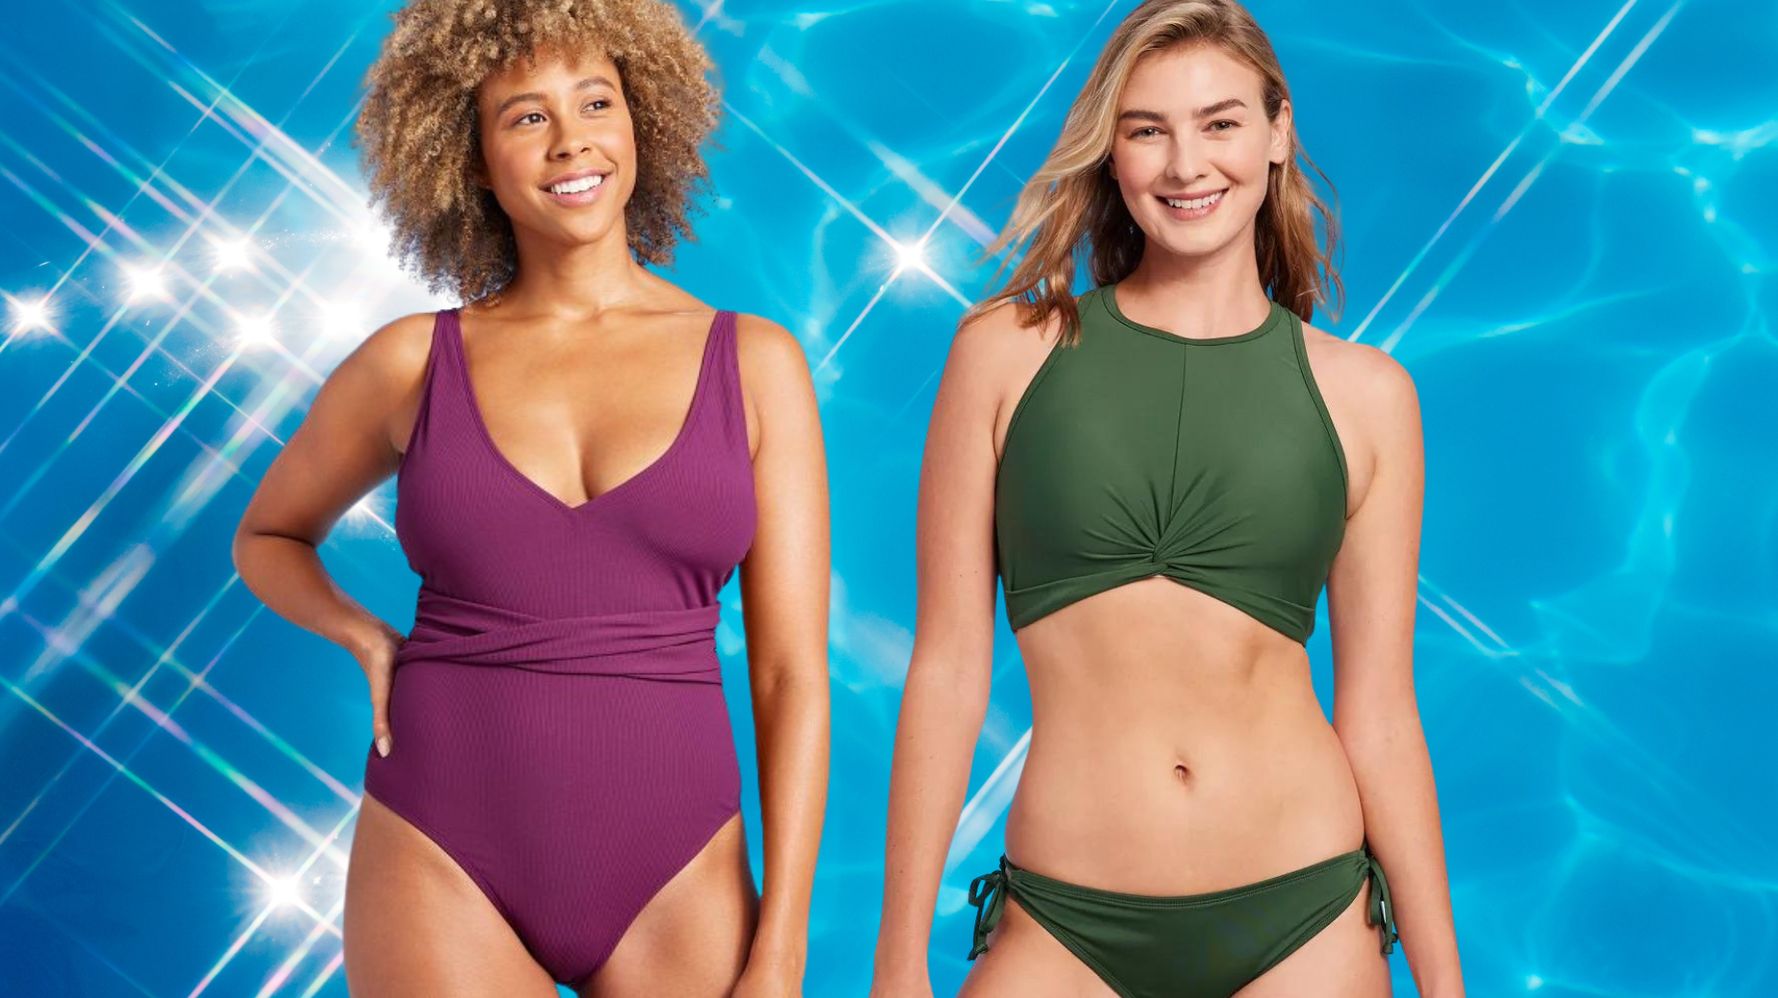 Carla Swimwear: Australian Retailer of Swimwear, Bikinis & Bathers